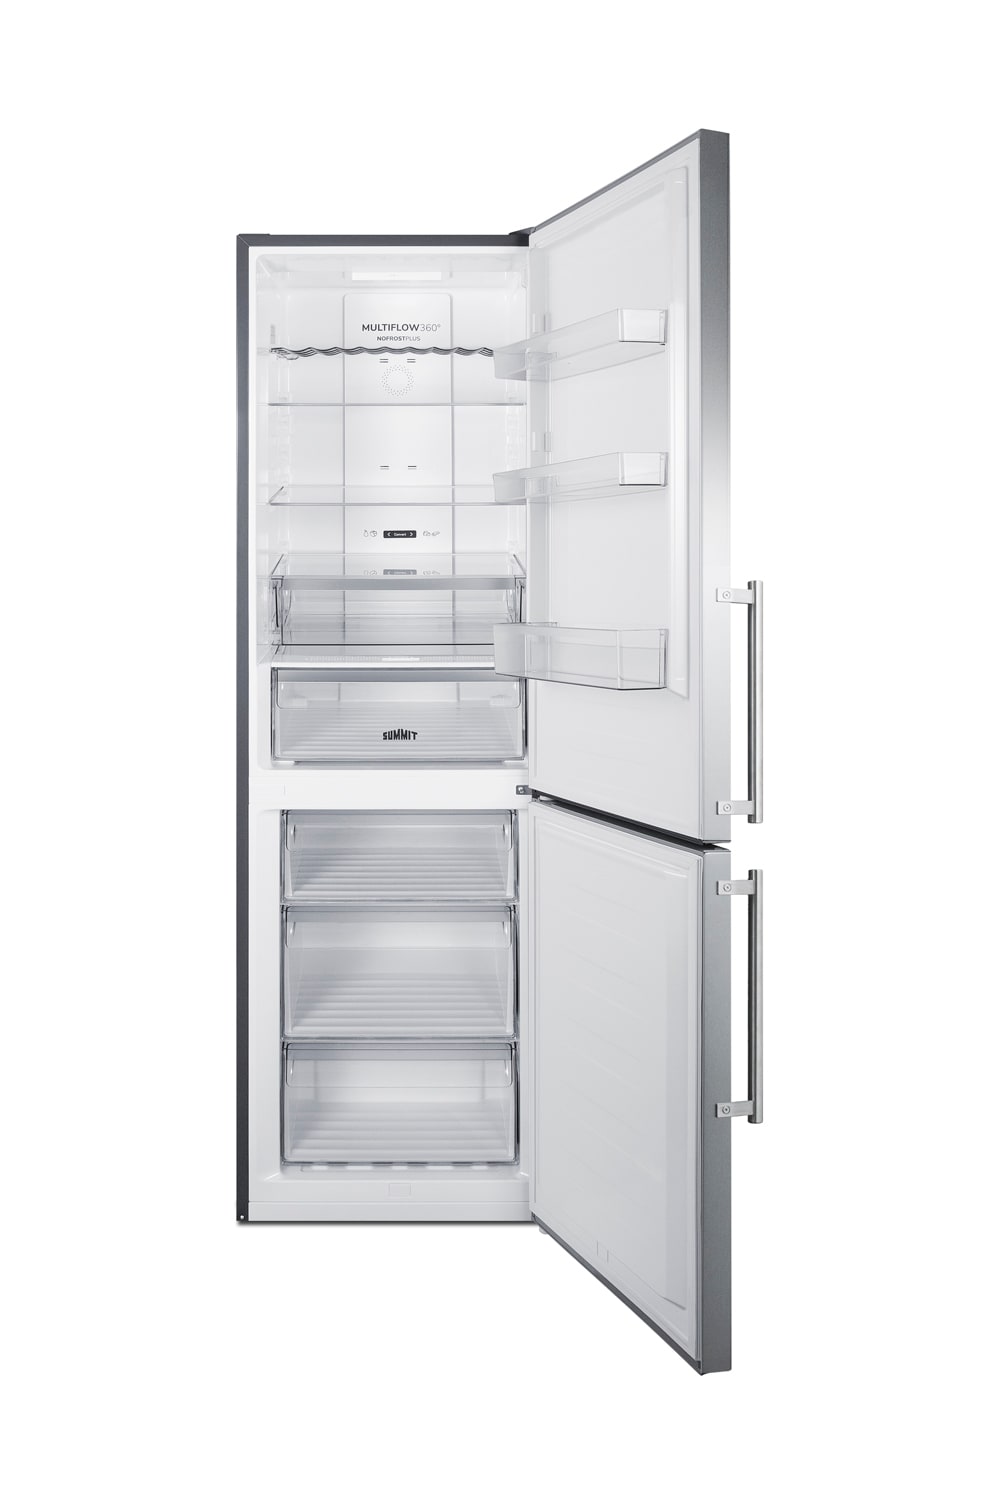 24-in Bottom-Freezer Refrigerators at